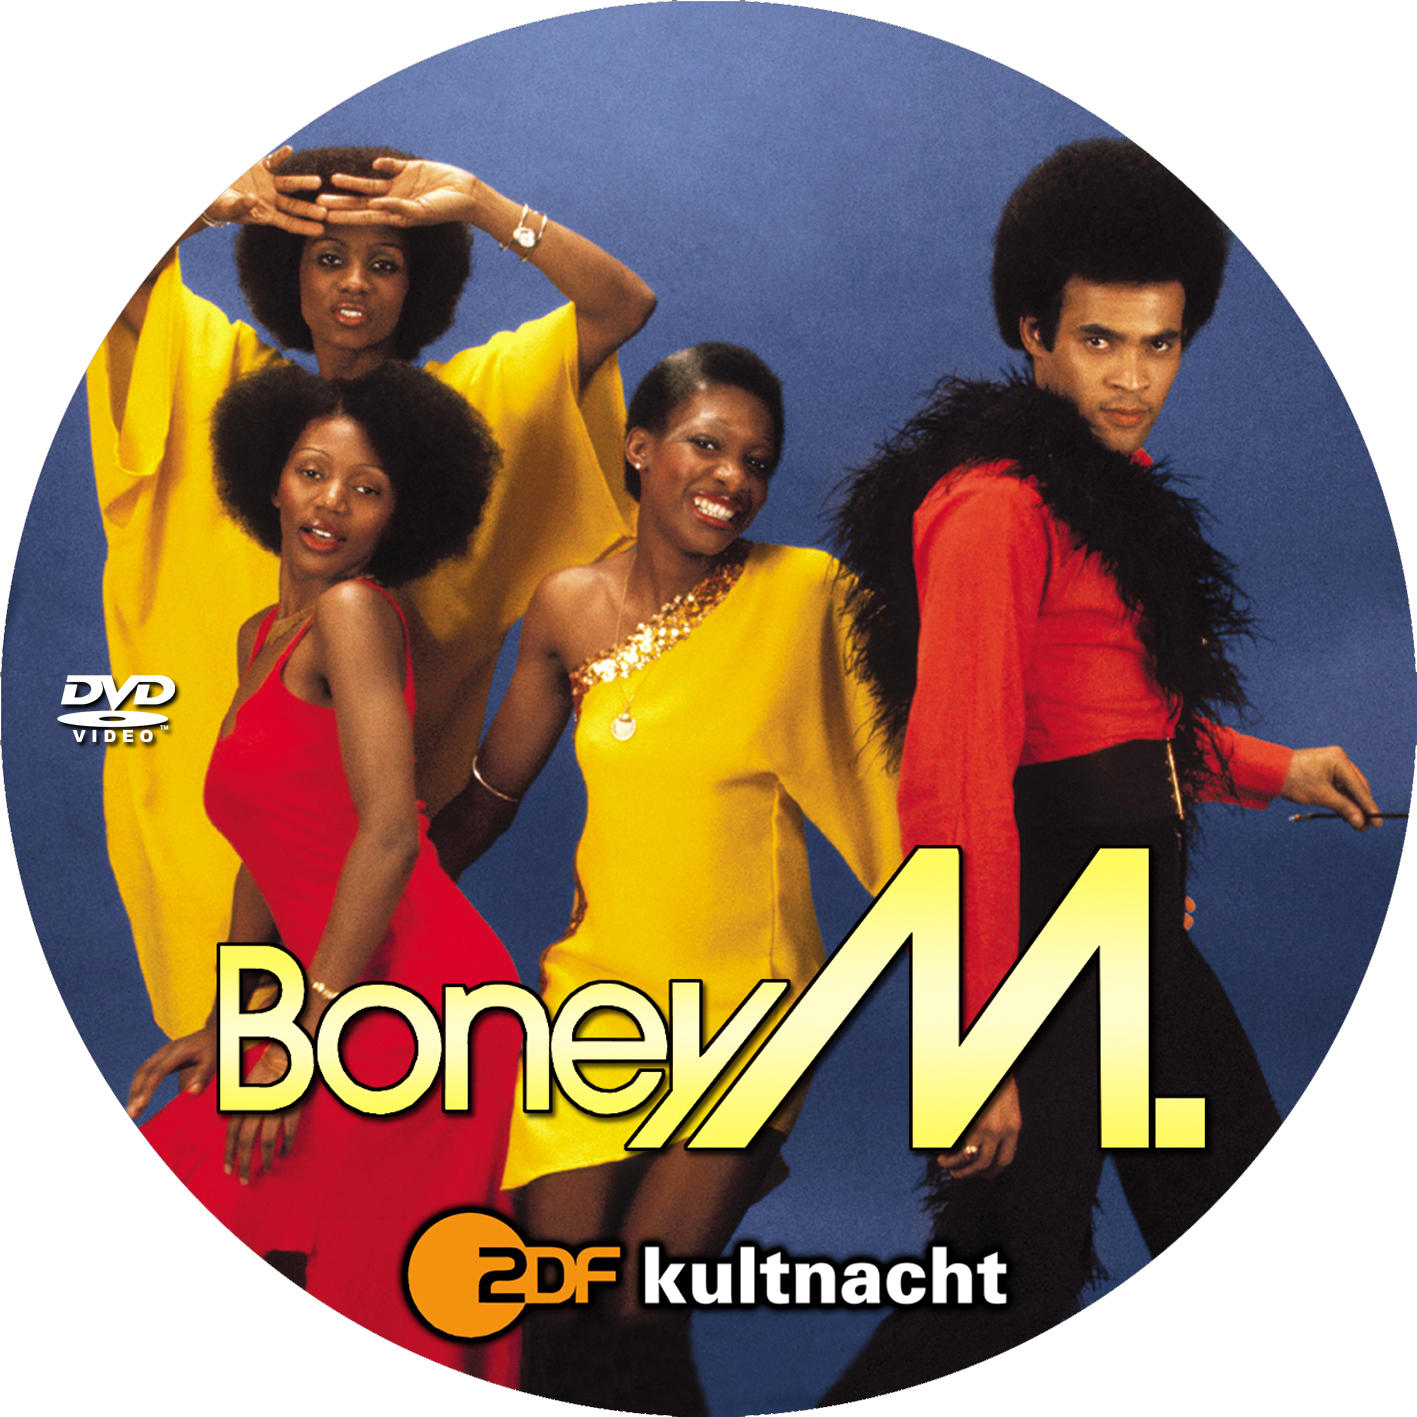 Boney m на русском. Группа Boney m.. Группа Boney m. дискография. Группа Boney m. в 80. Группа Бони м 1975г.